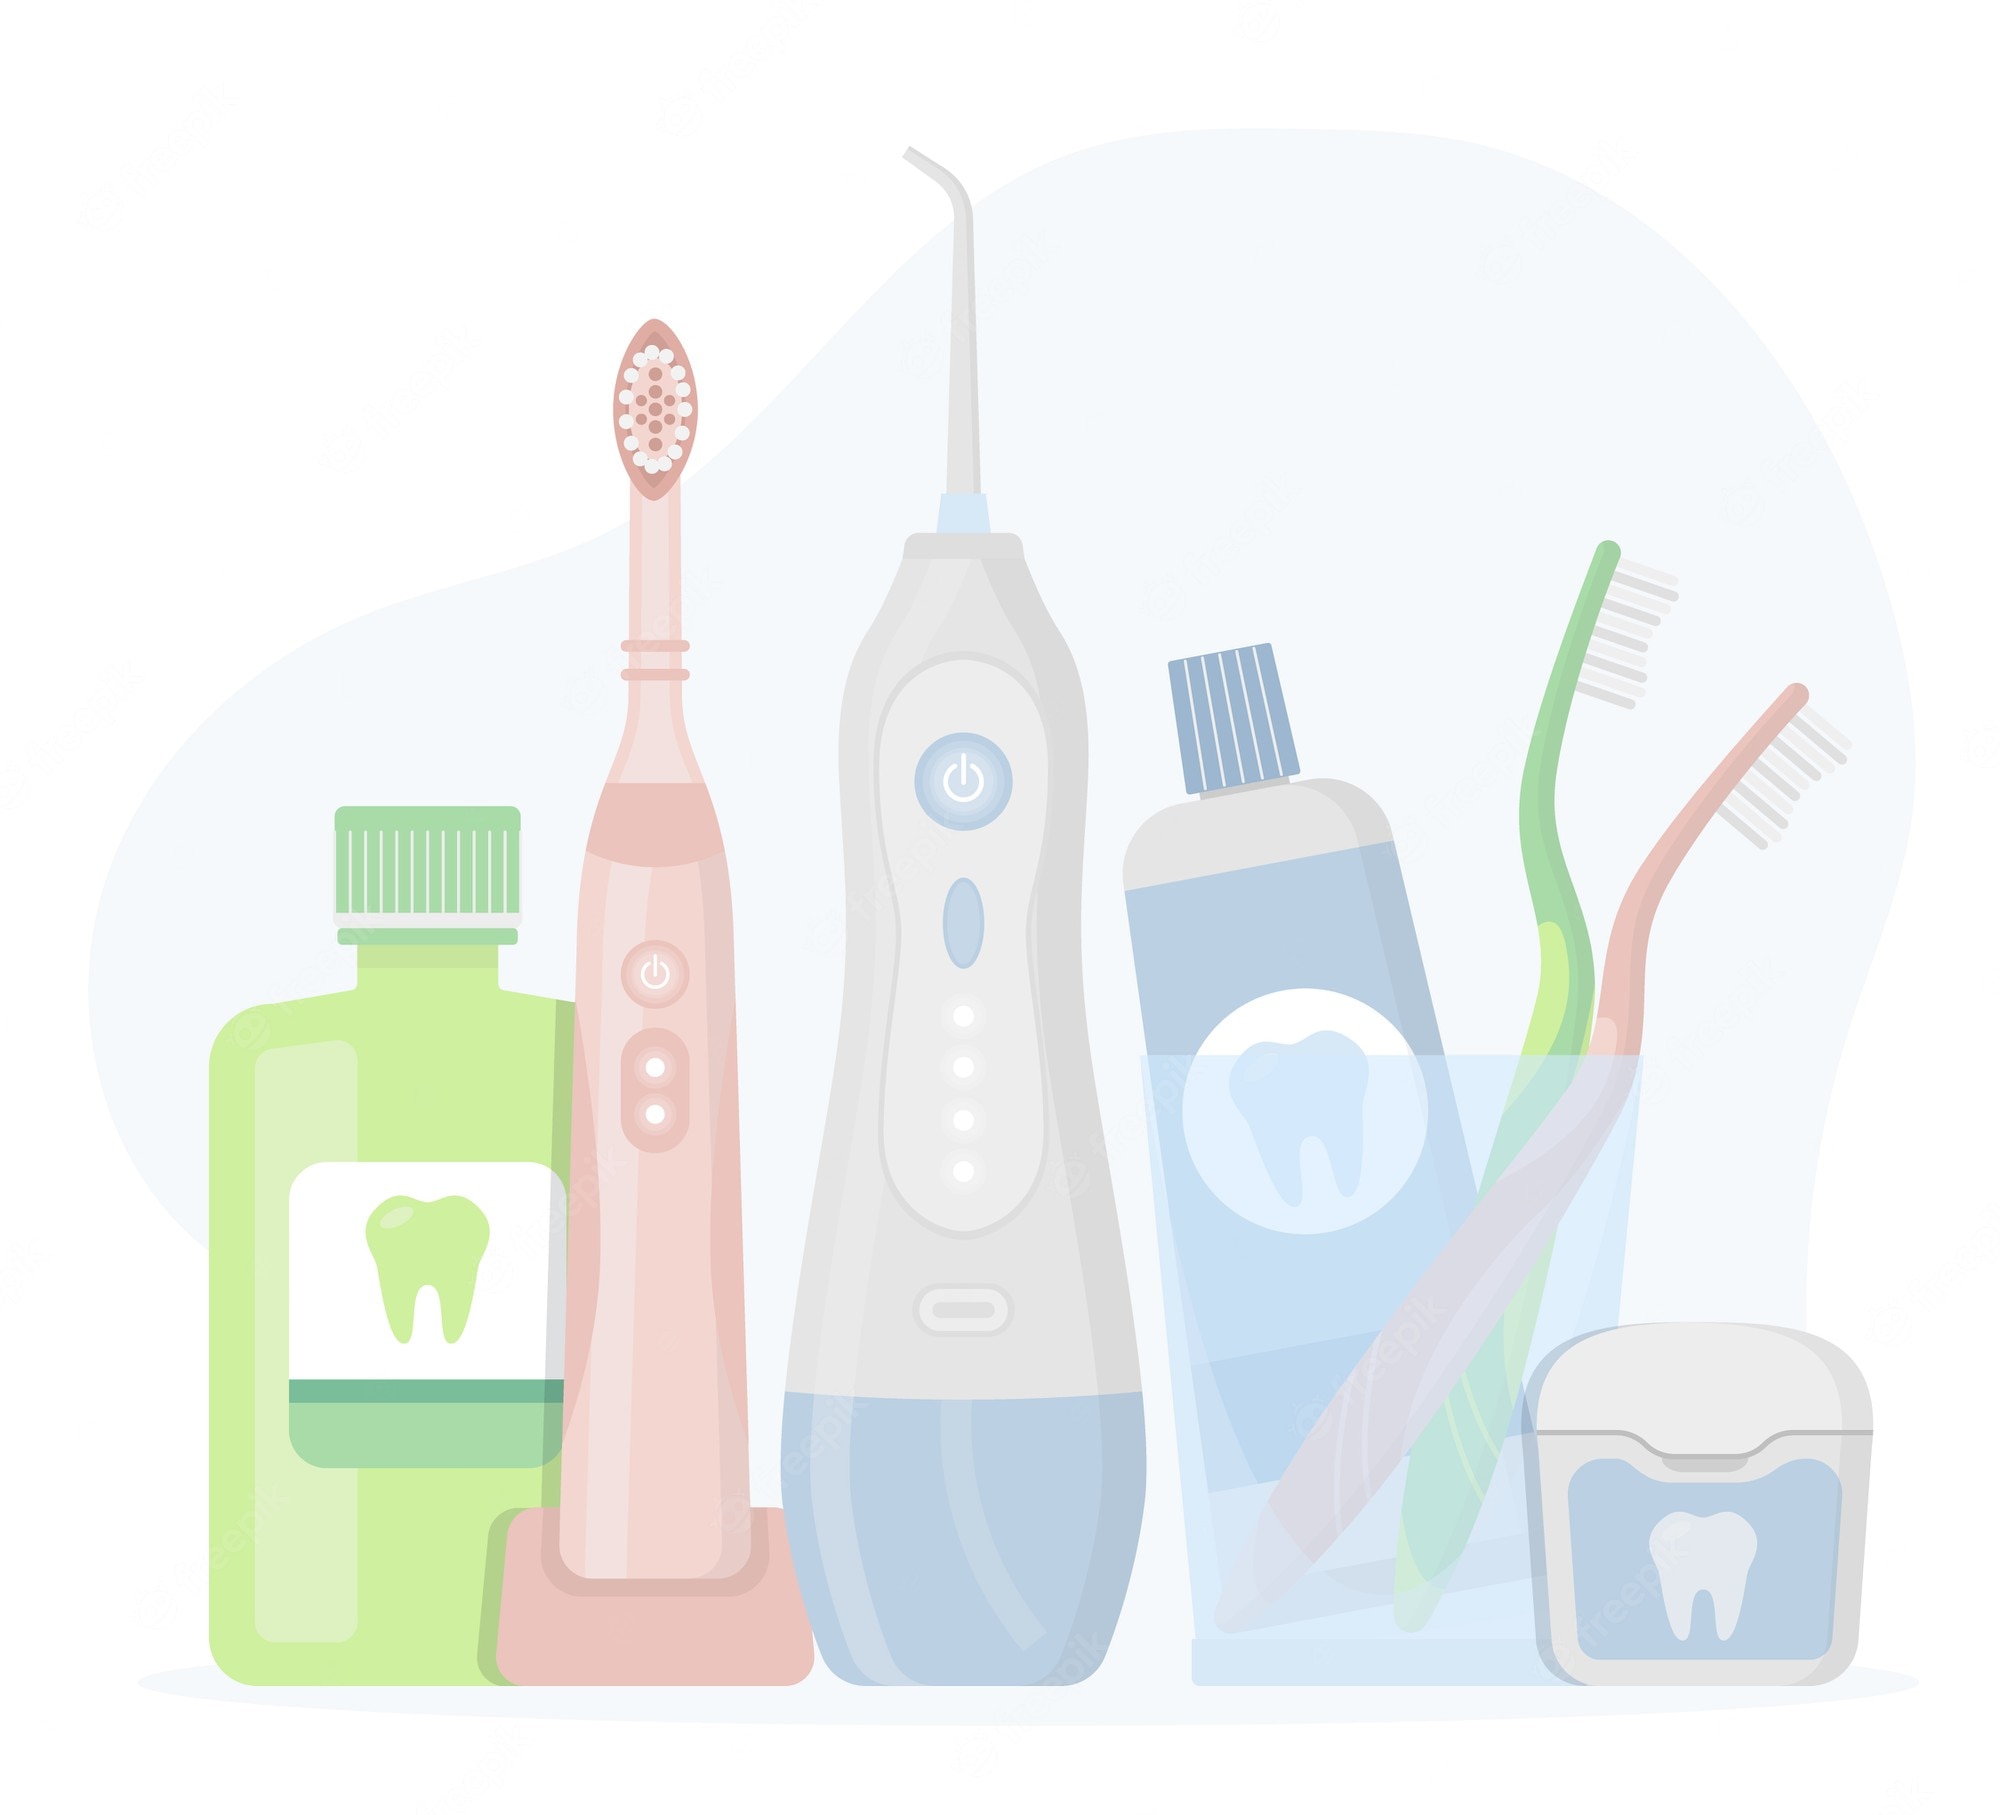 Electric toothbrush or manual toothbrush